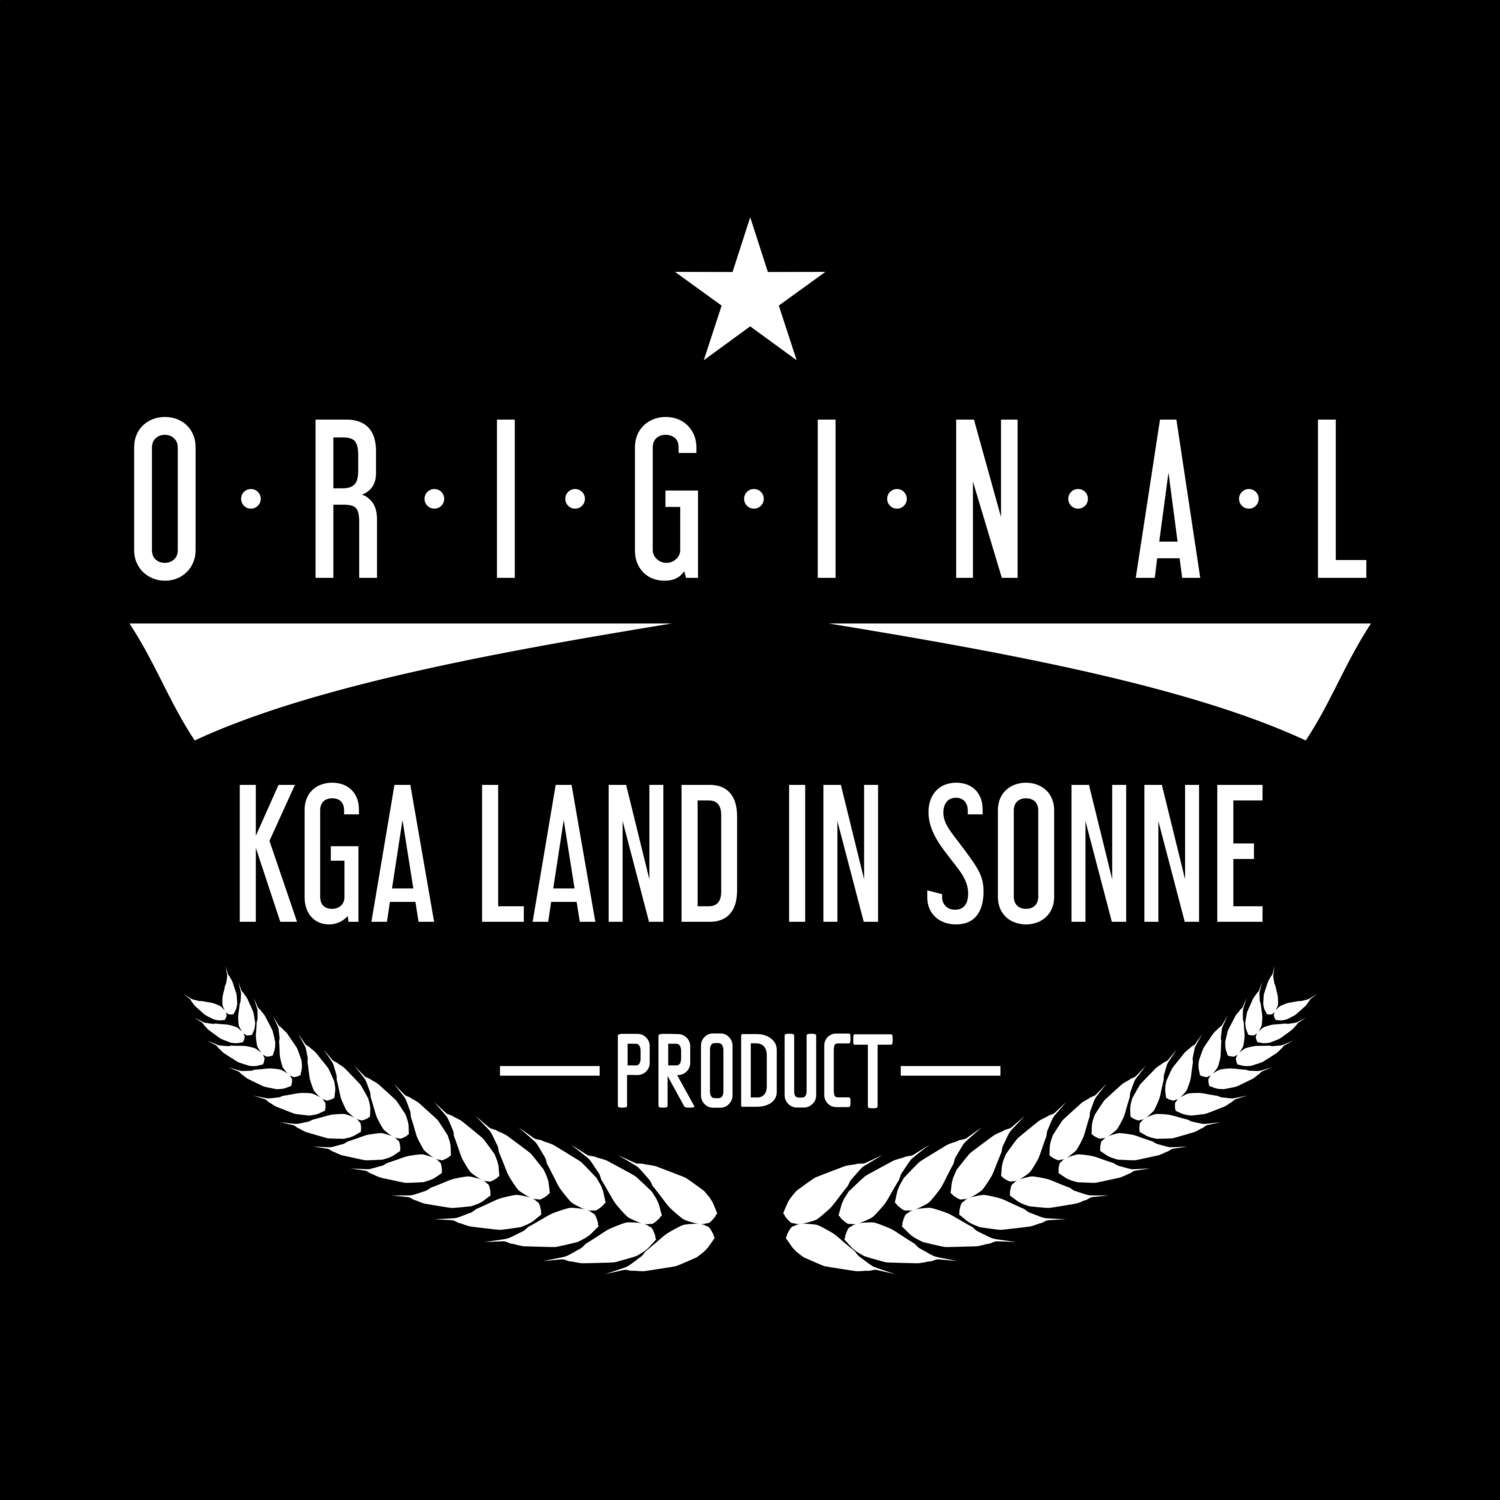 KGA Land in Sonne T-Shirt »Original Product«